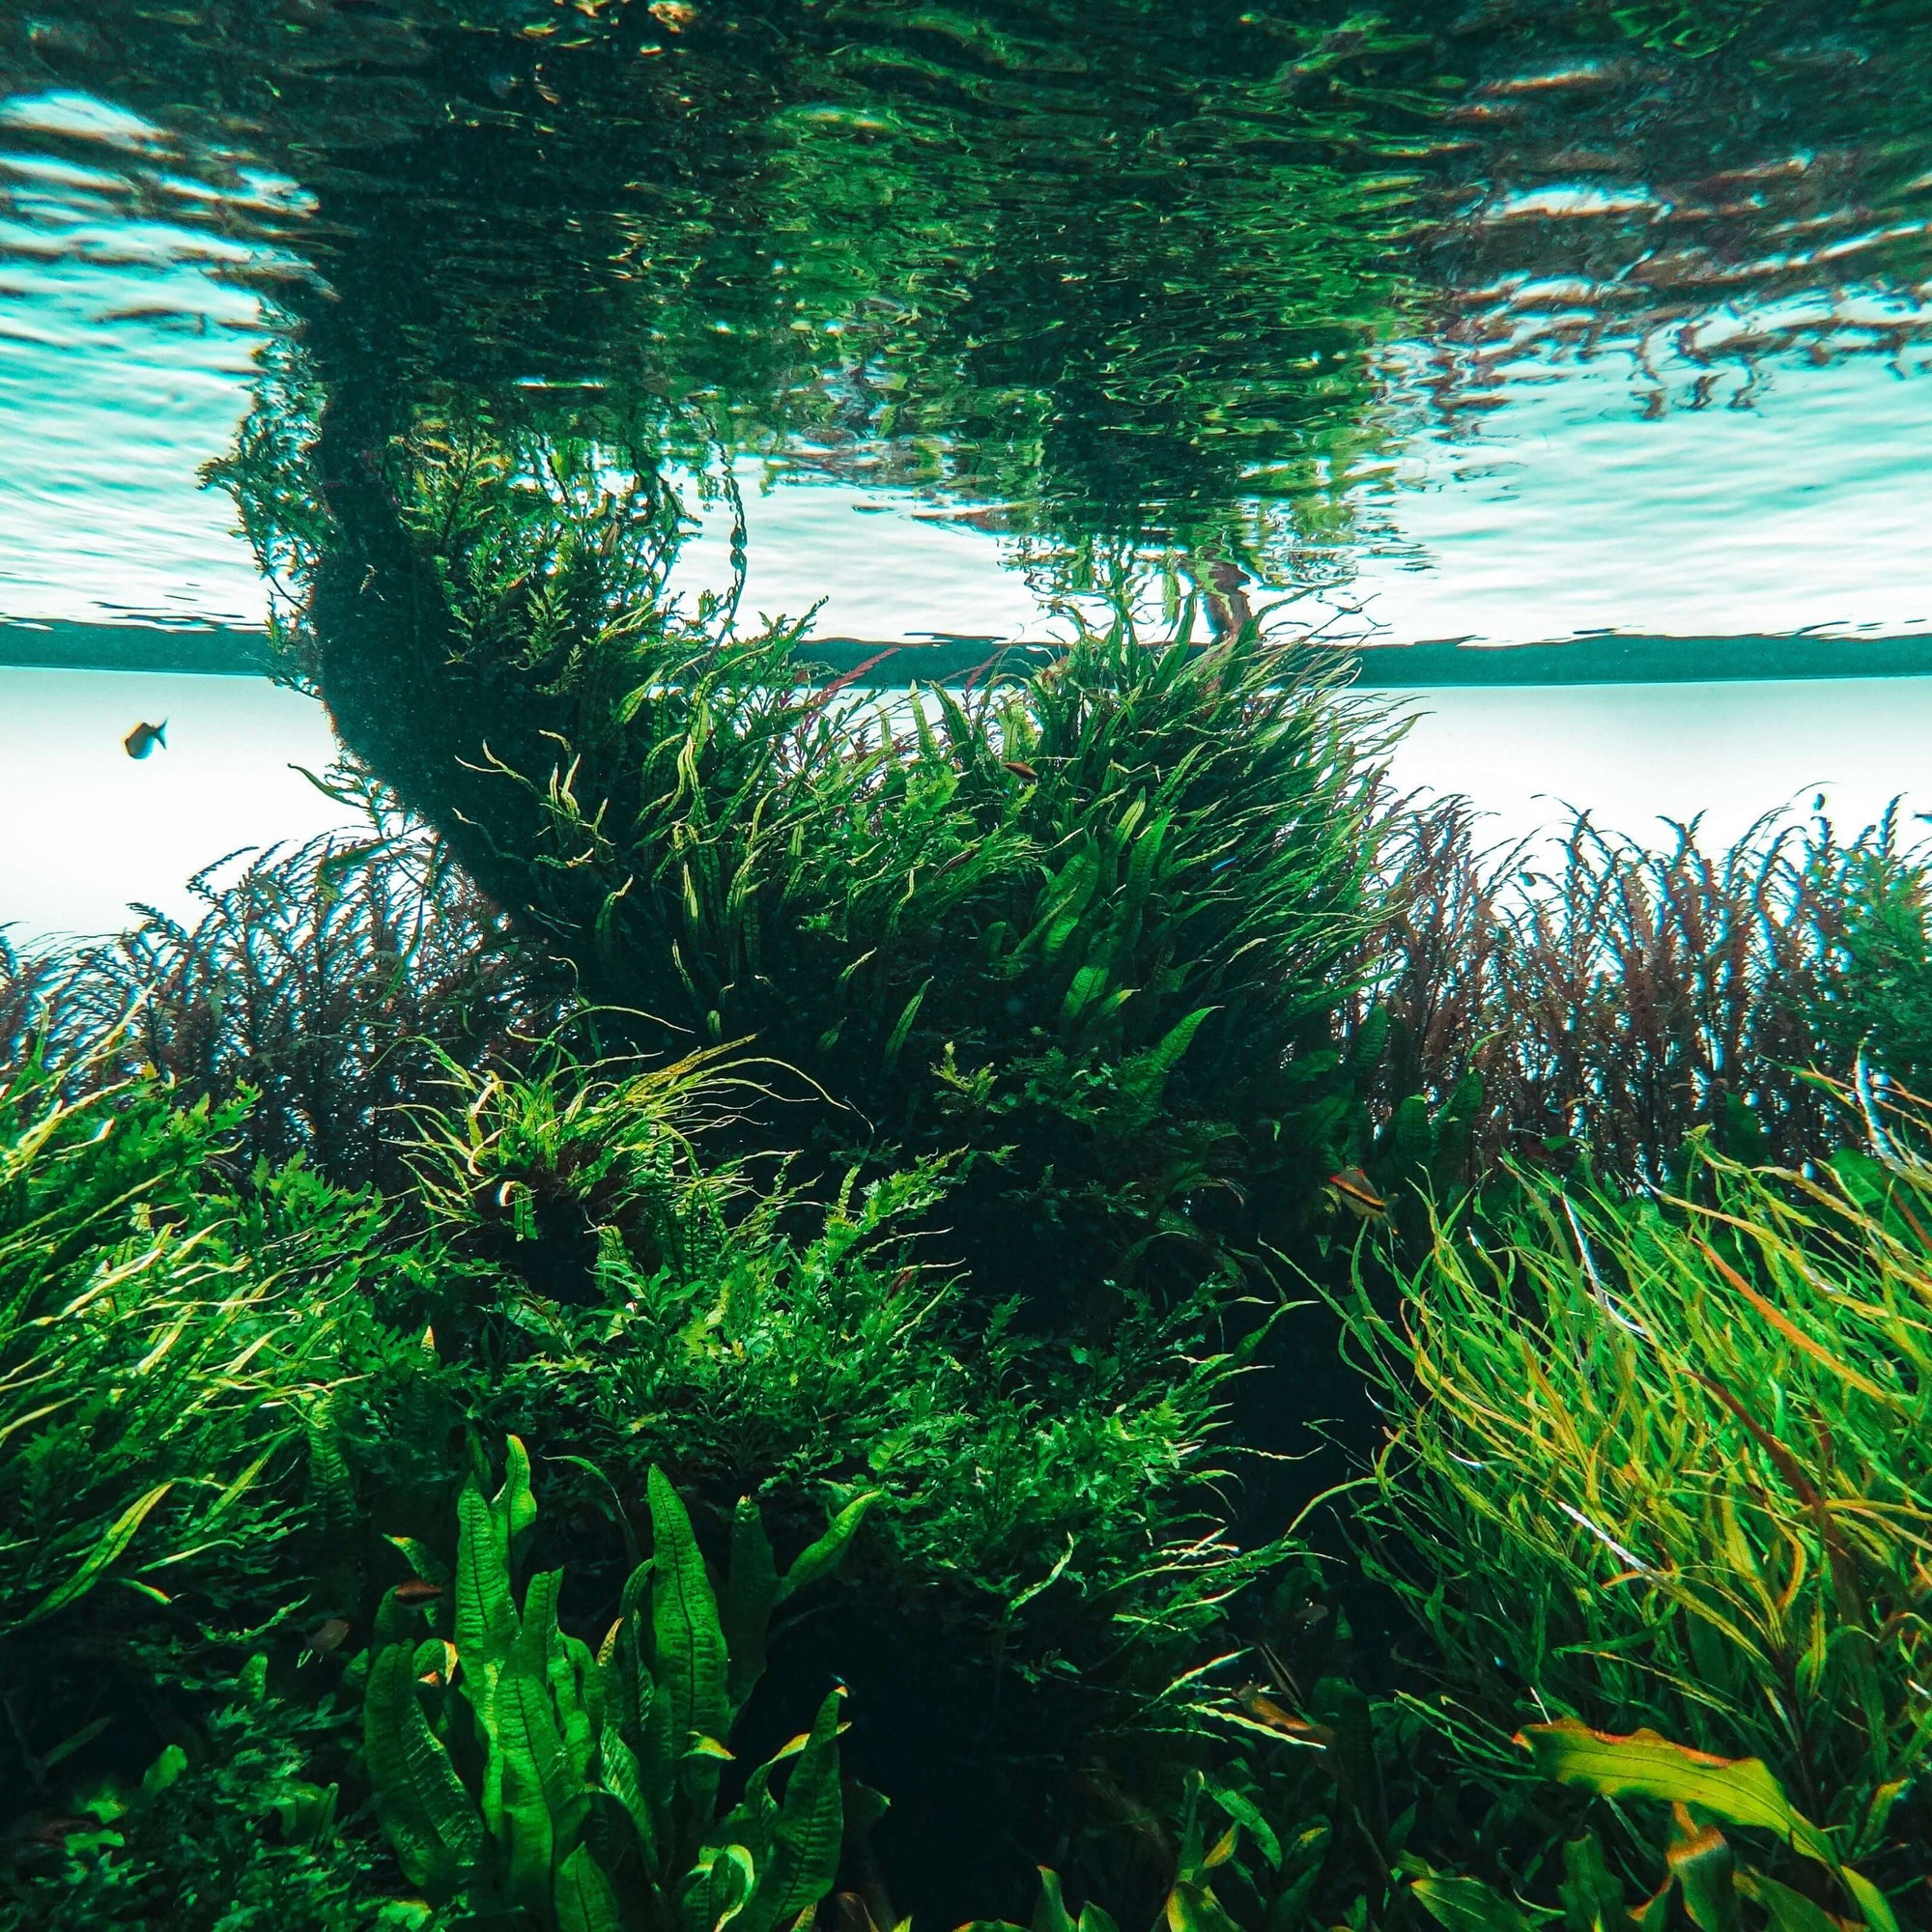 Be Bohemian Botanical Sea Serum Algae. Algae growing in the ocean, reflecting against the water as a mirror image of itself.